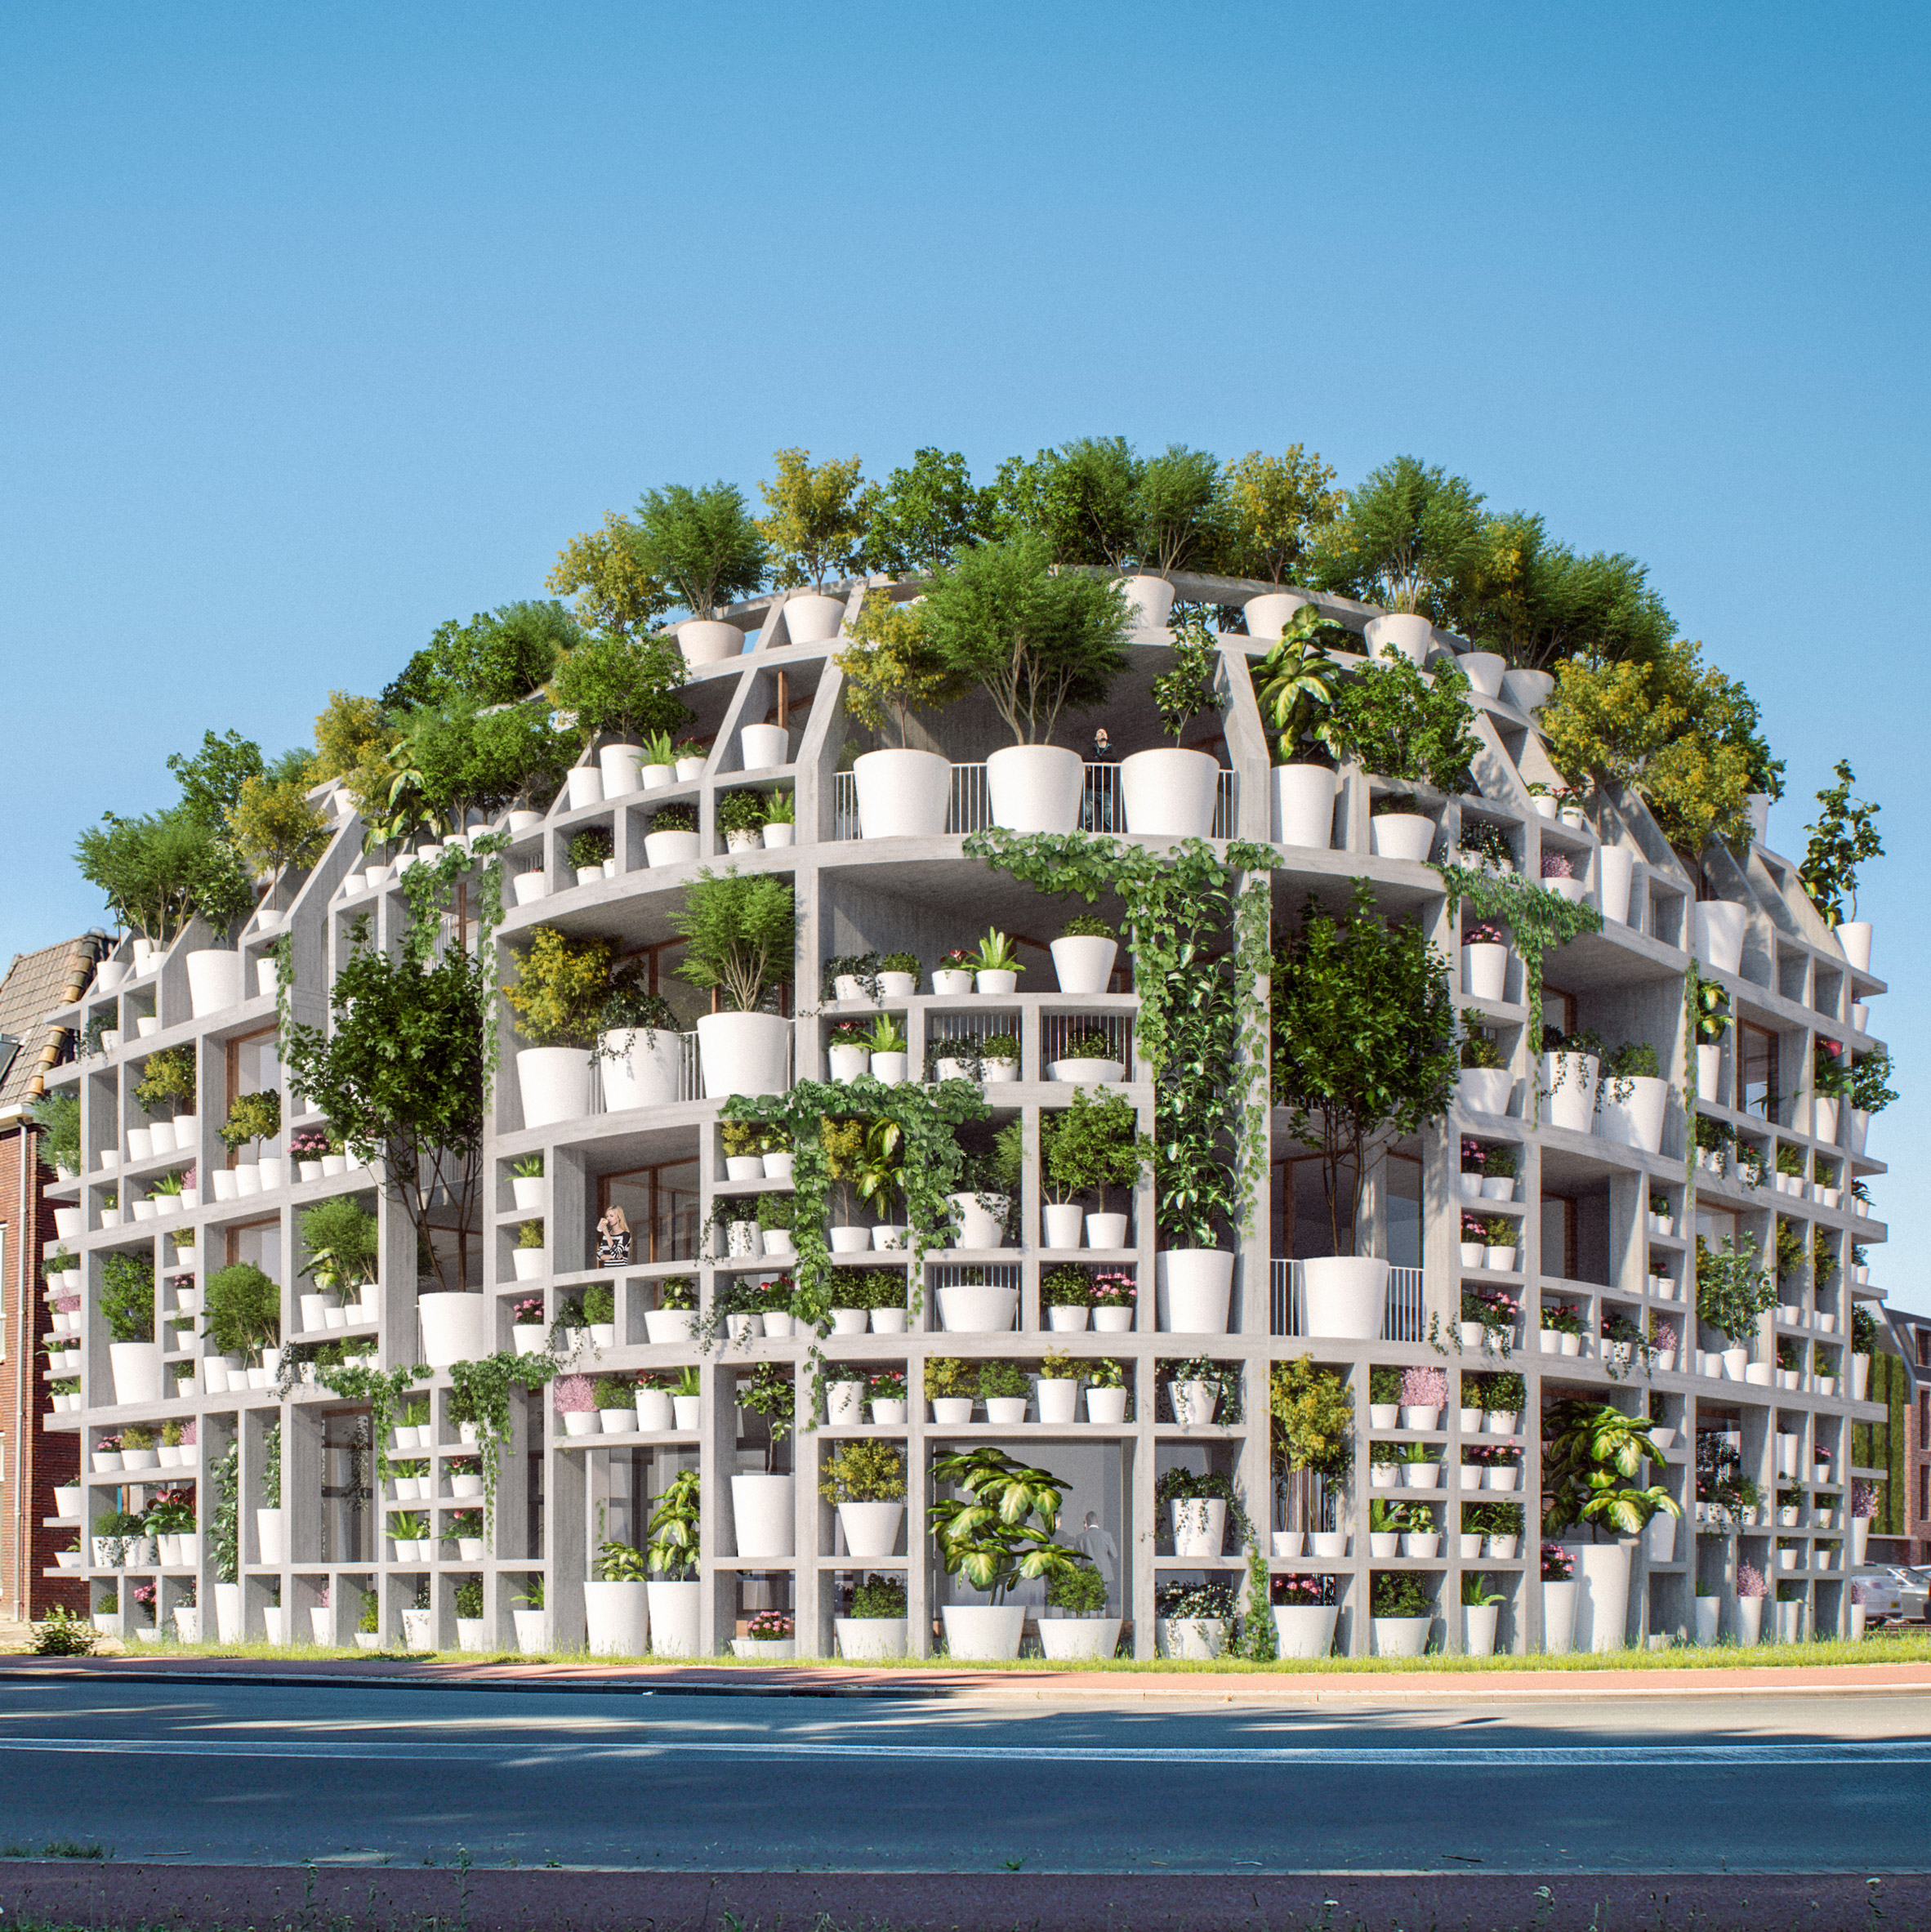 Plant Pots Will Cover Green Villa By Mvrdv In The Netherlands